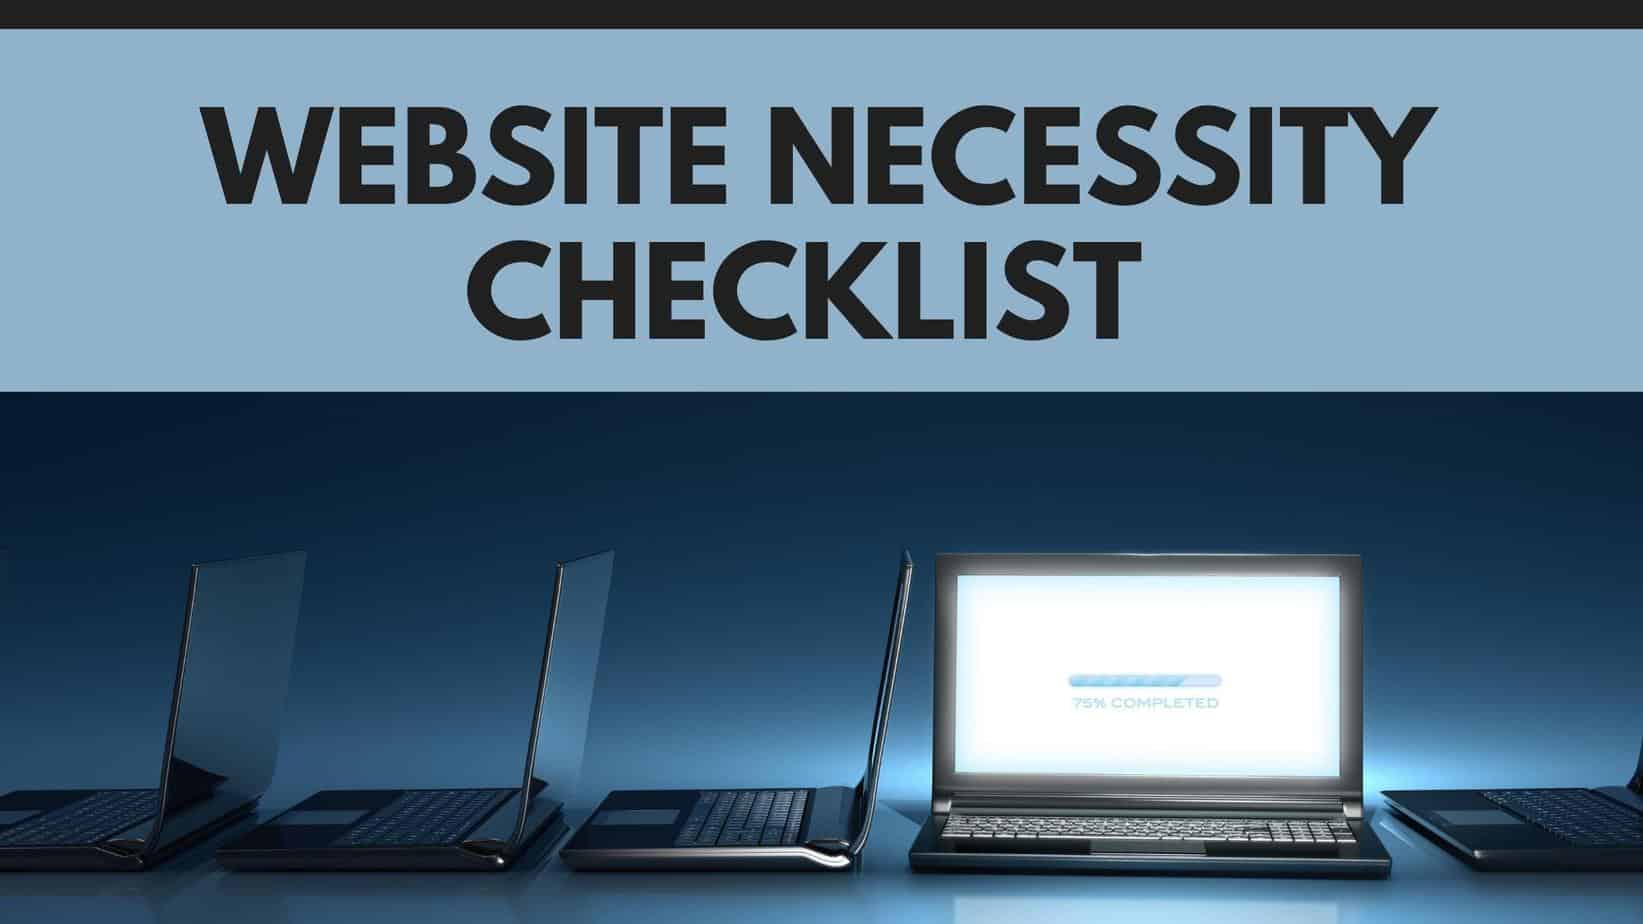 Featured image for “Website Necessity Checklist”